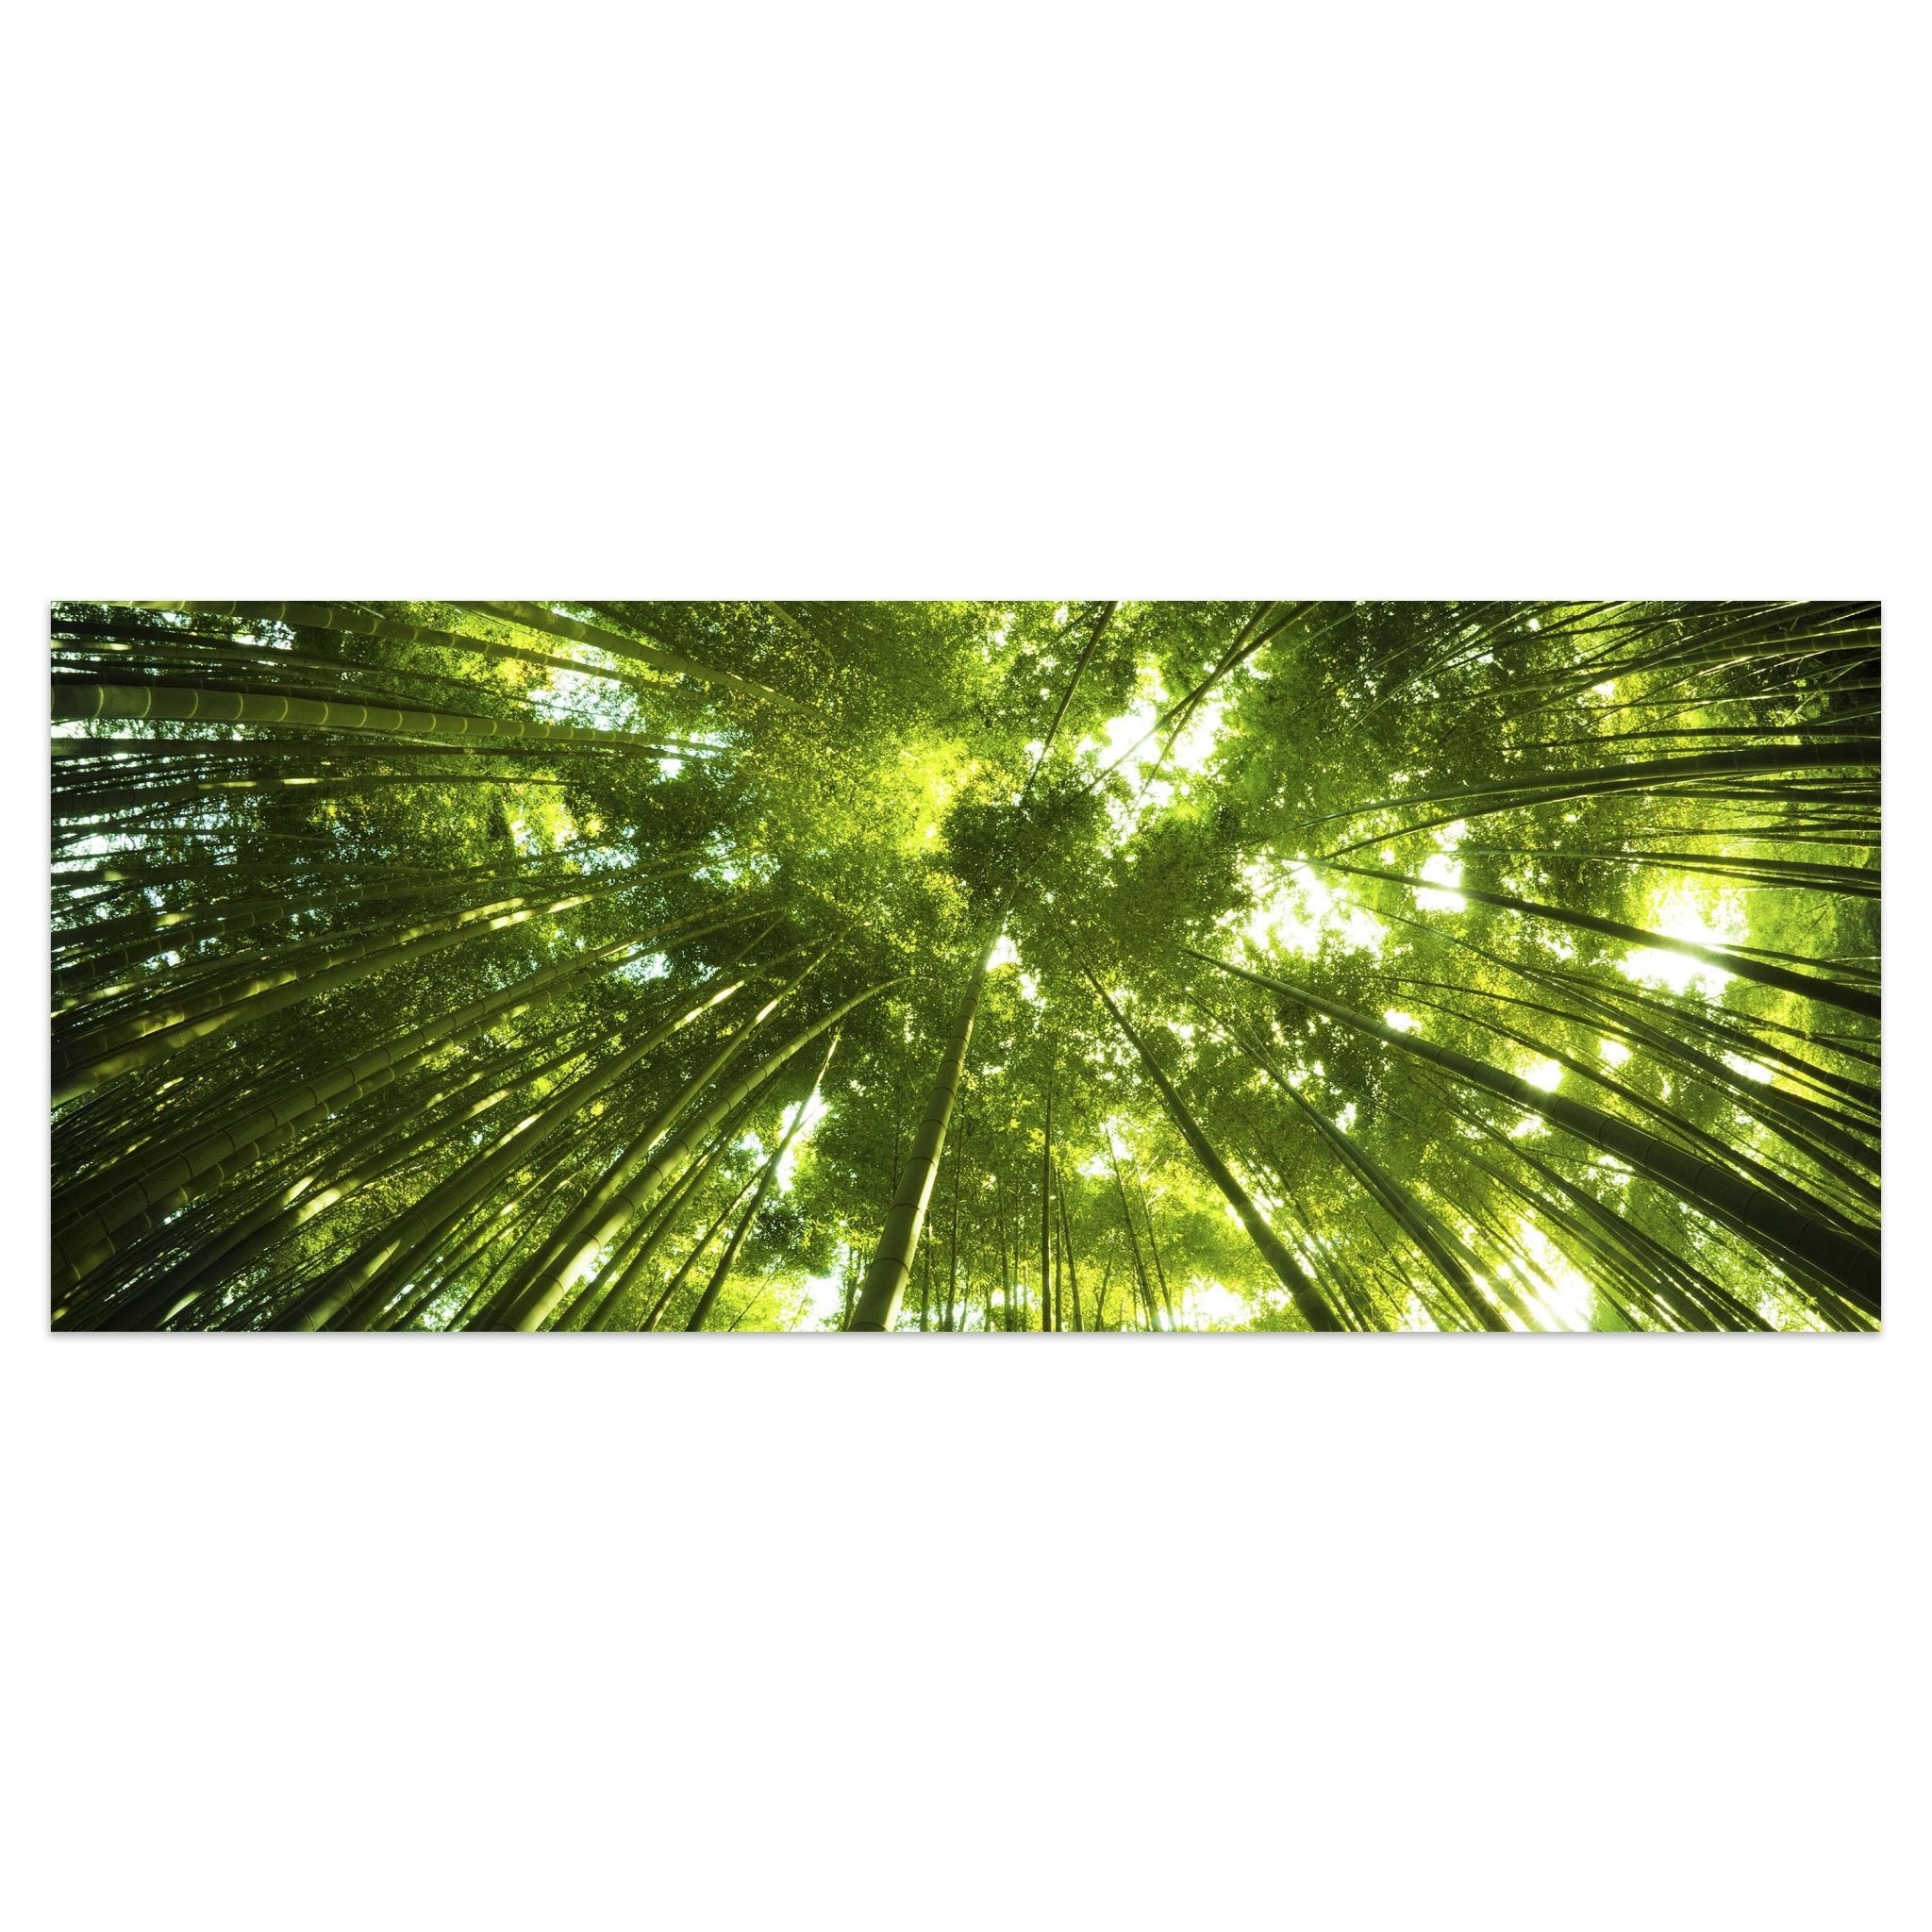 Leinwandbild Bambus Wald M0338 kaufen - Bild 1